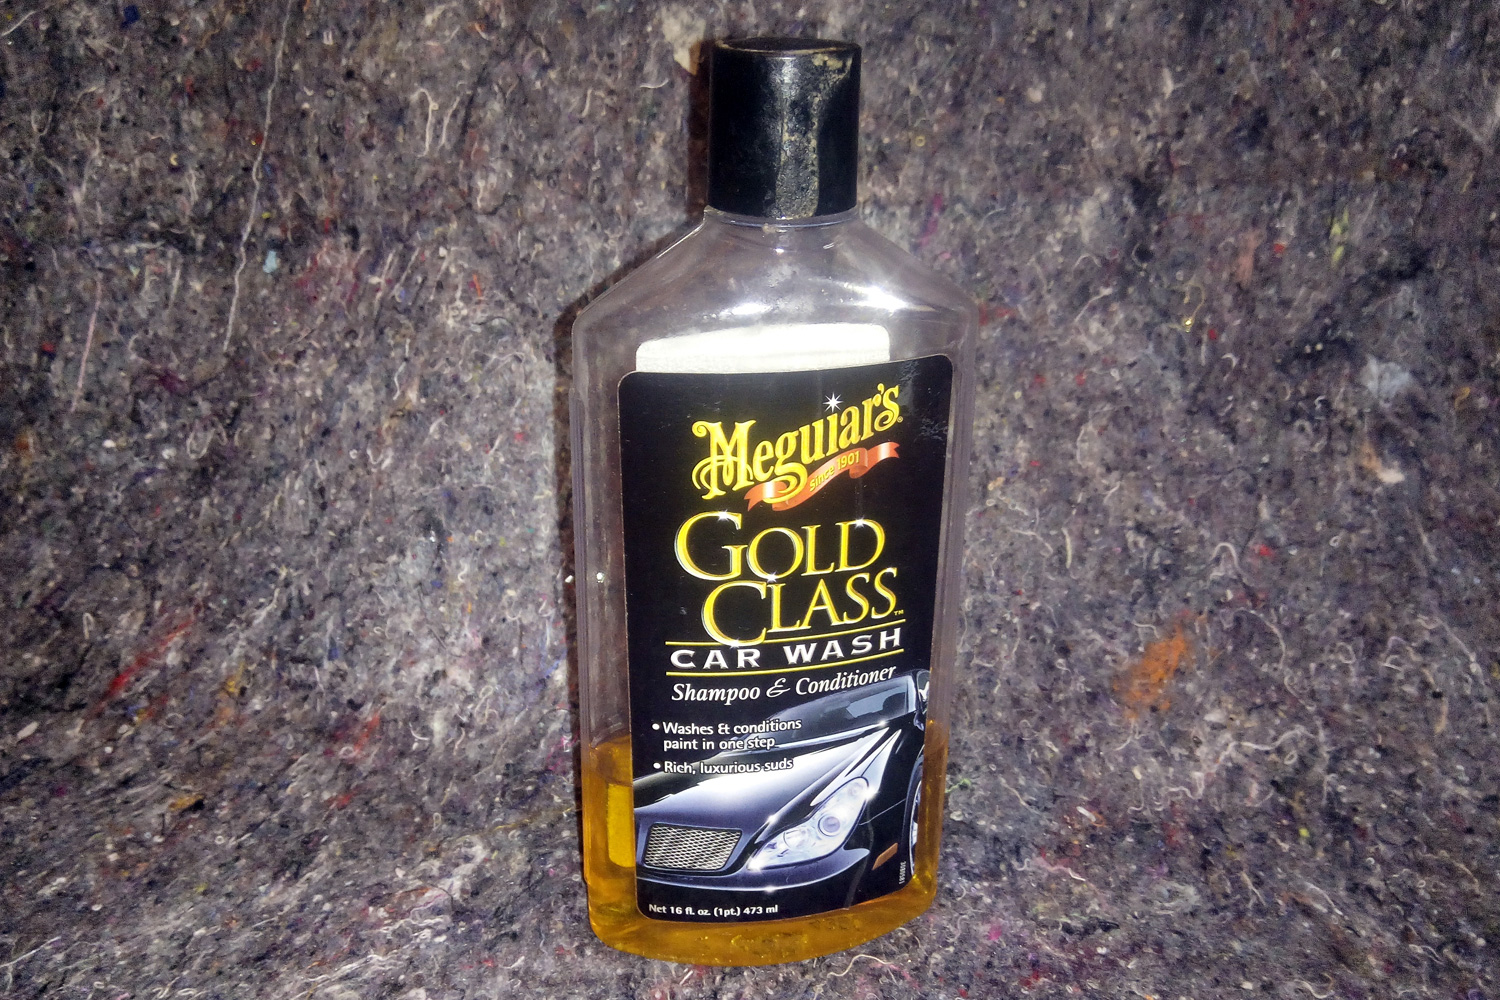 Meguiar’s Gold Class Car Wash - Erfahrung mit dem Autoshampoo bei der Autowäsche